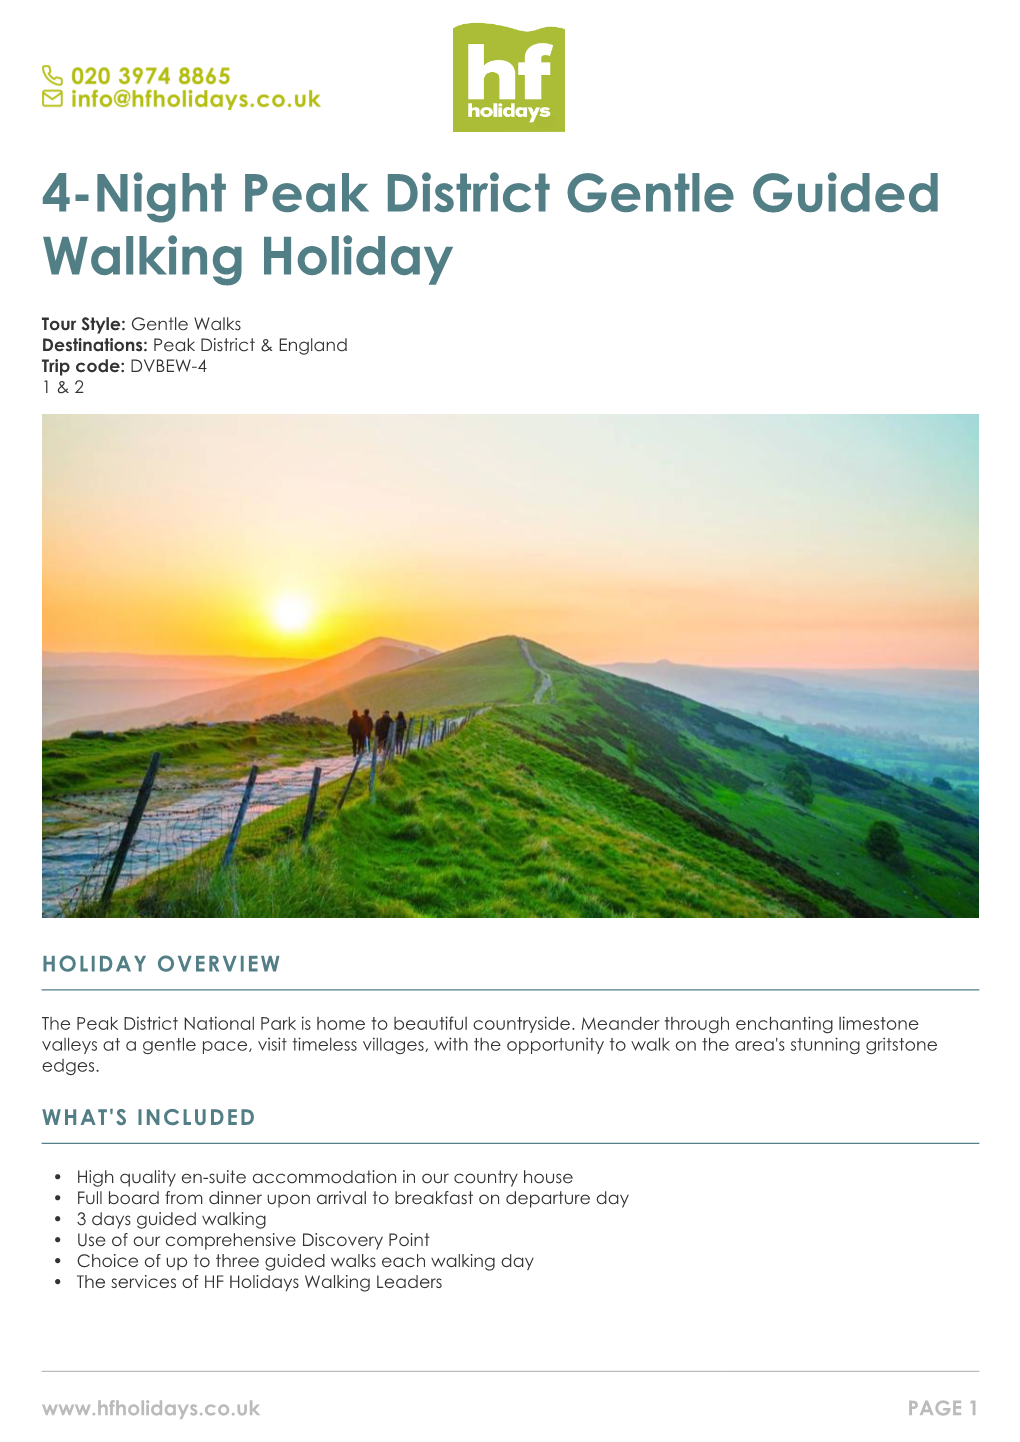 4-Night Peak District Gentle Guided Walking Holiday